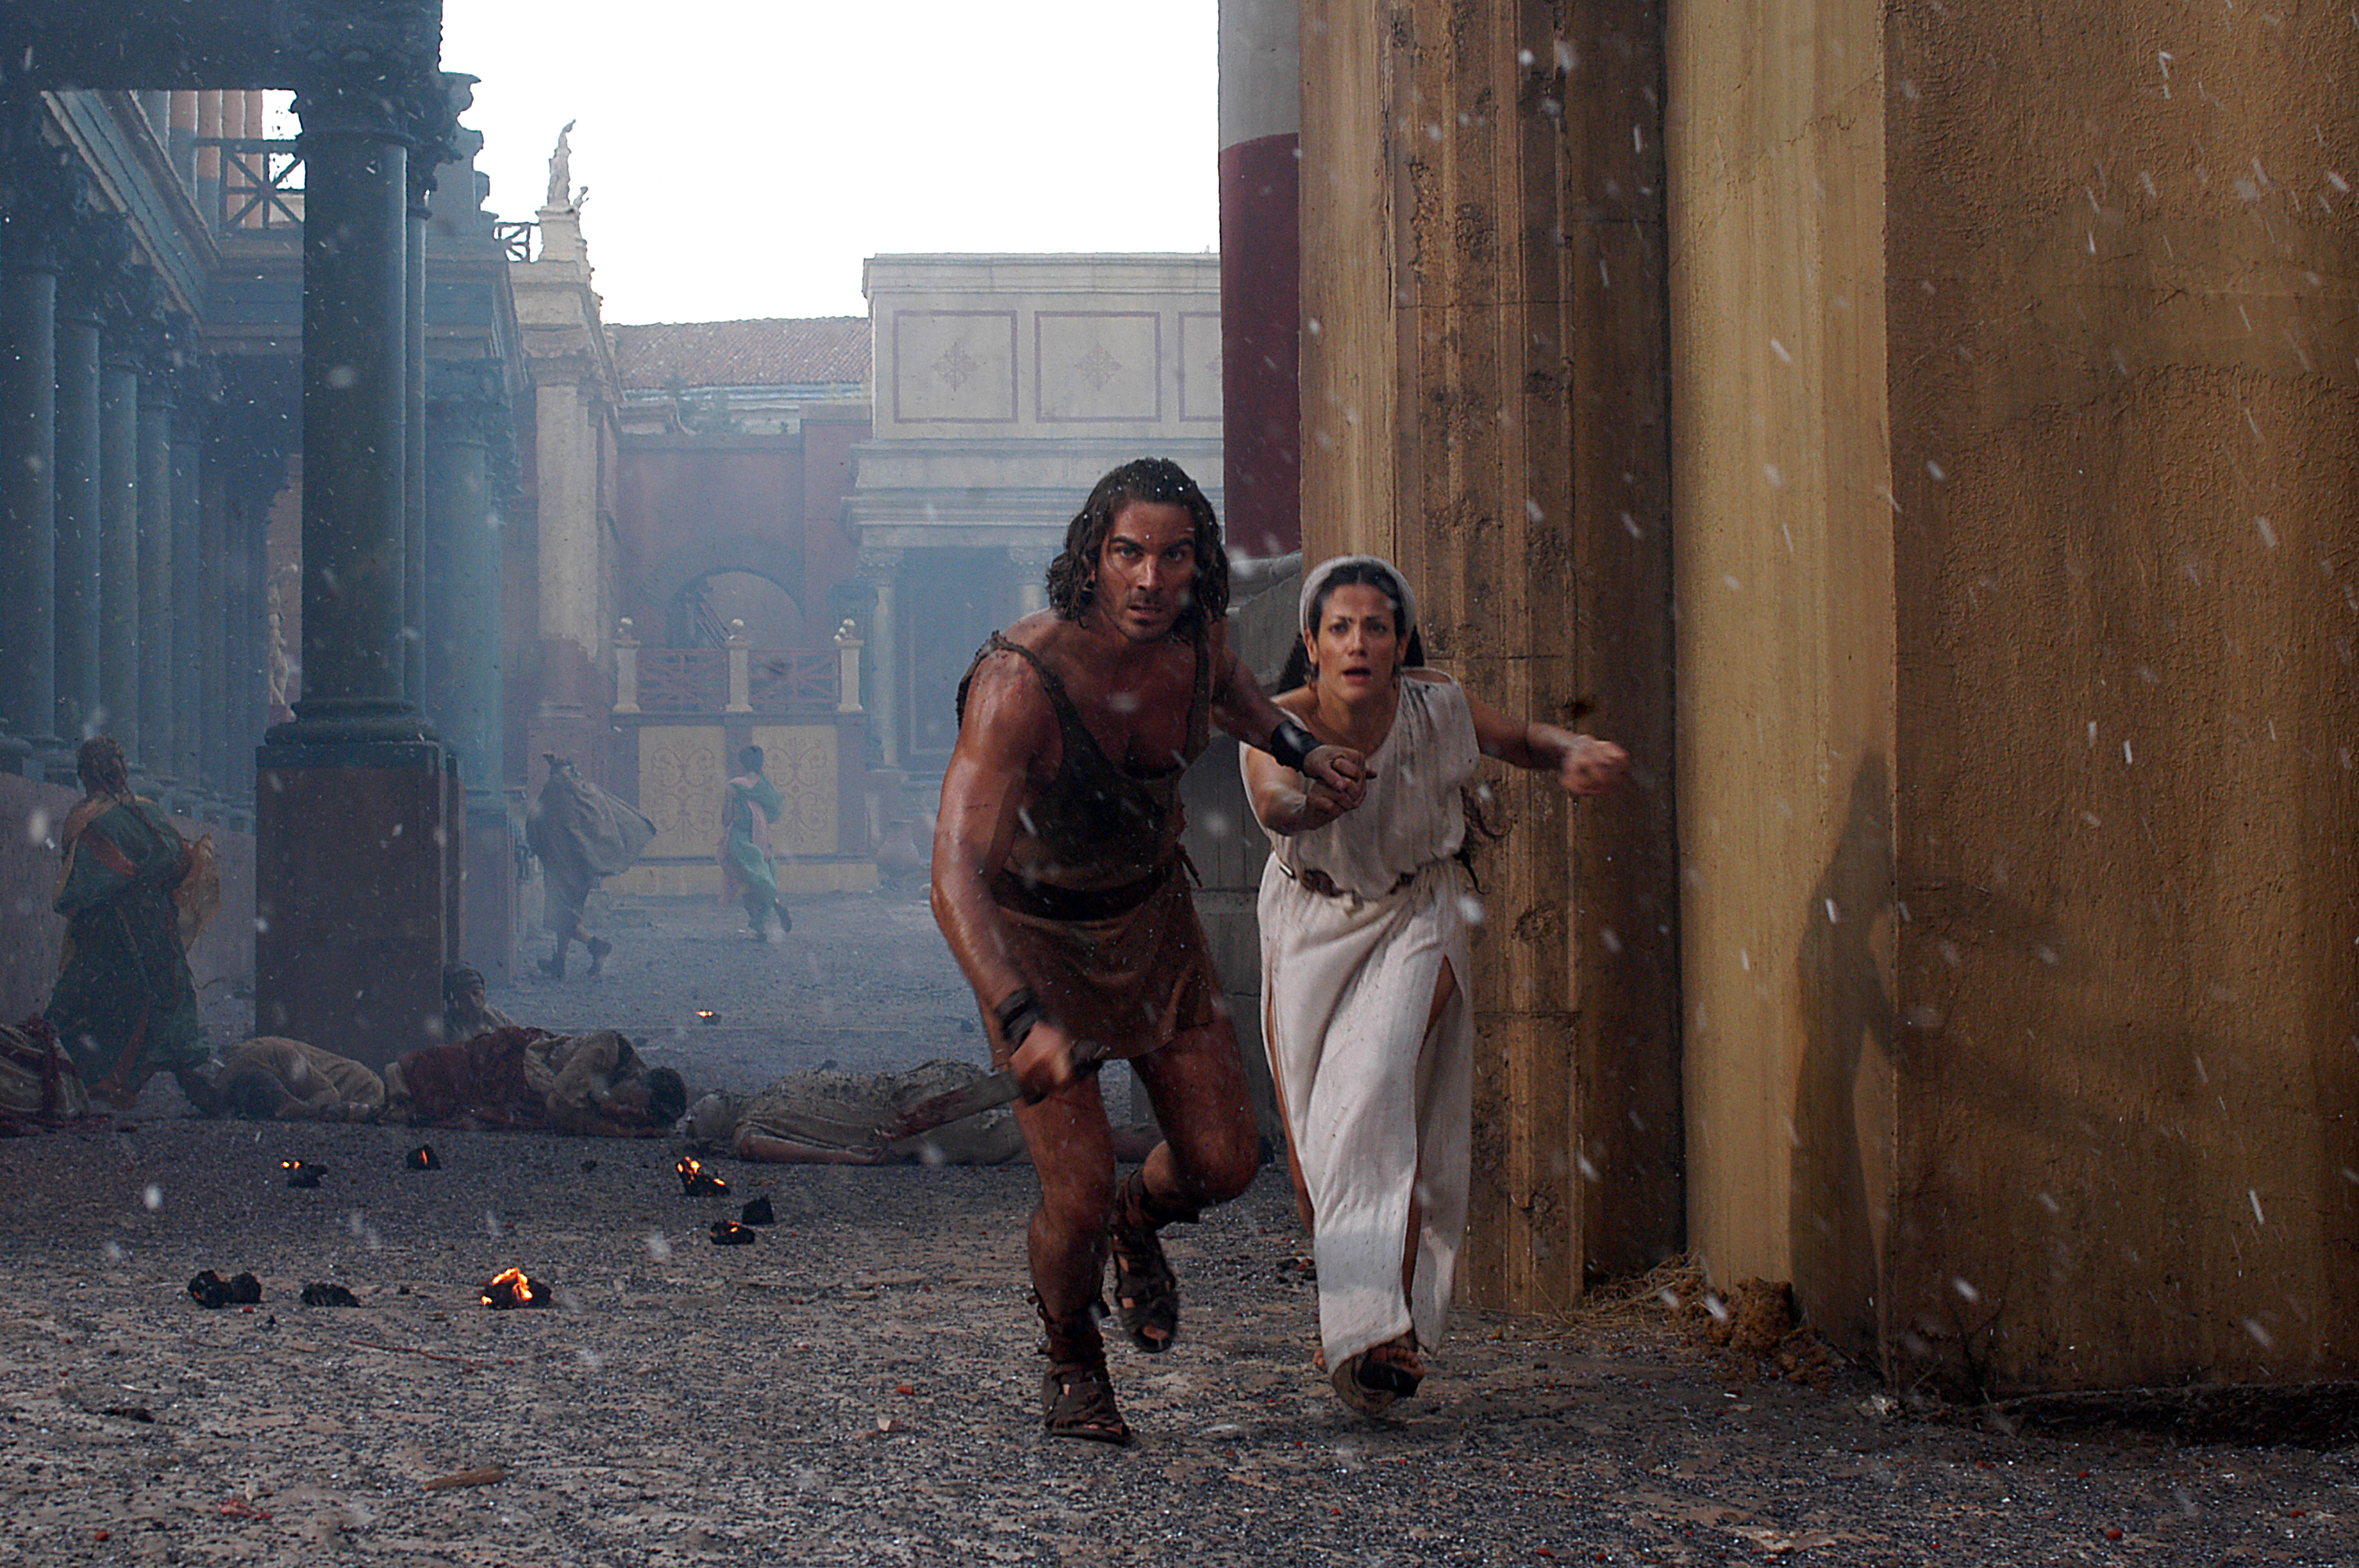 Victor Alfieri, Bettina Zimmerman Stills from the movie Pompeii